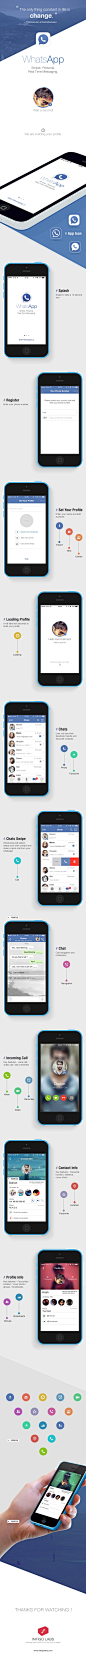 WhatsApp + Facebook UI/UX Concept on Behance